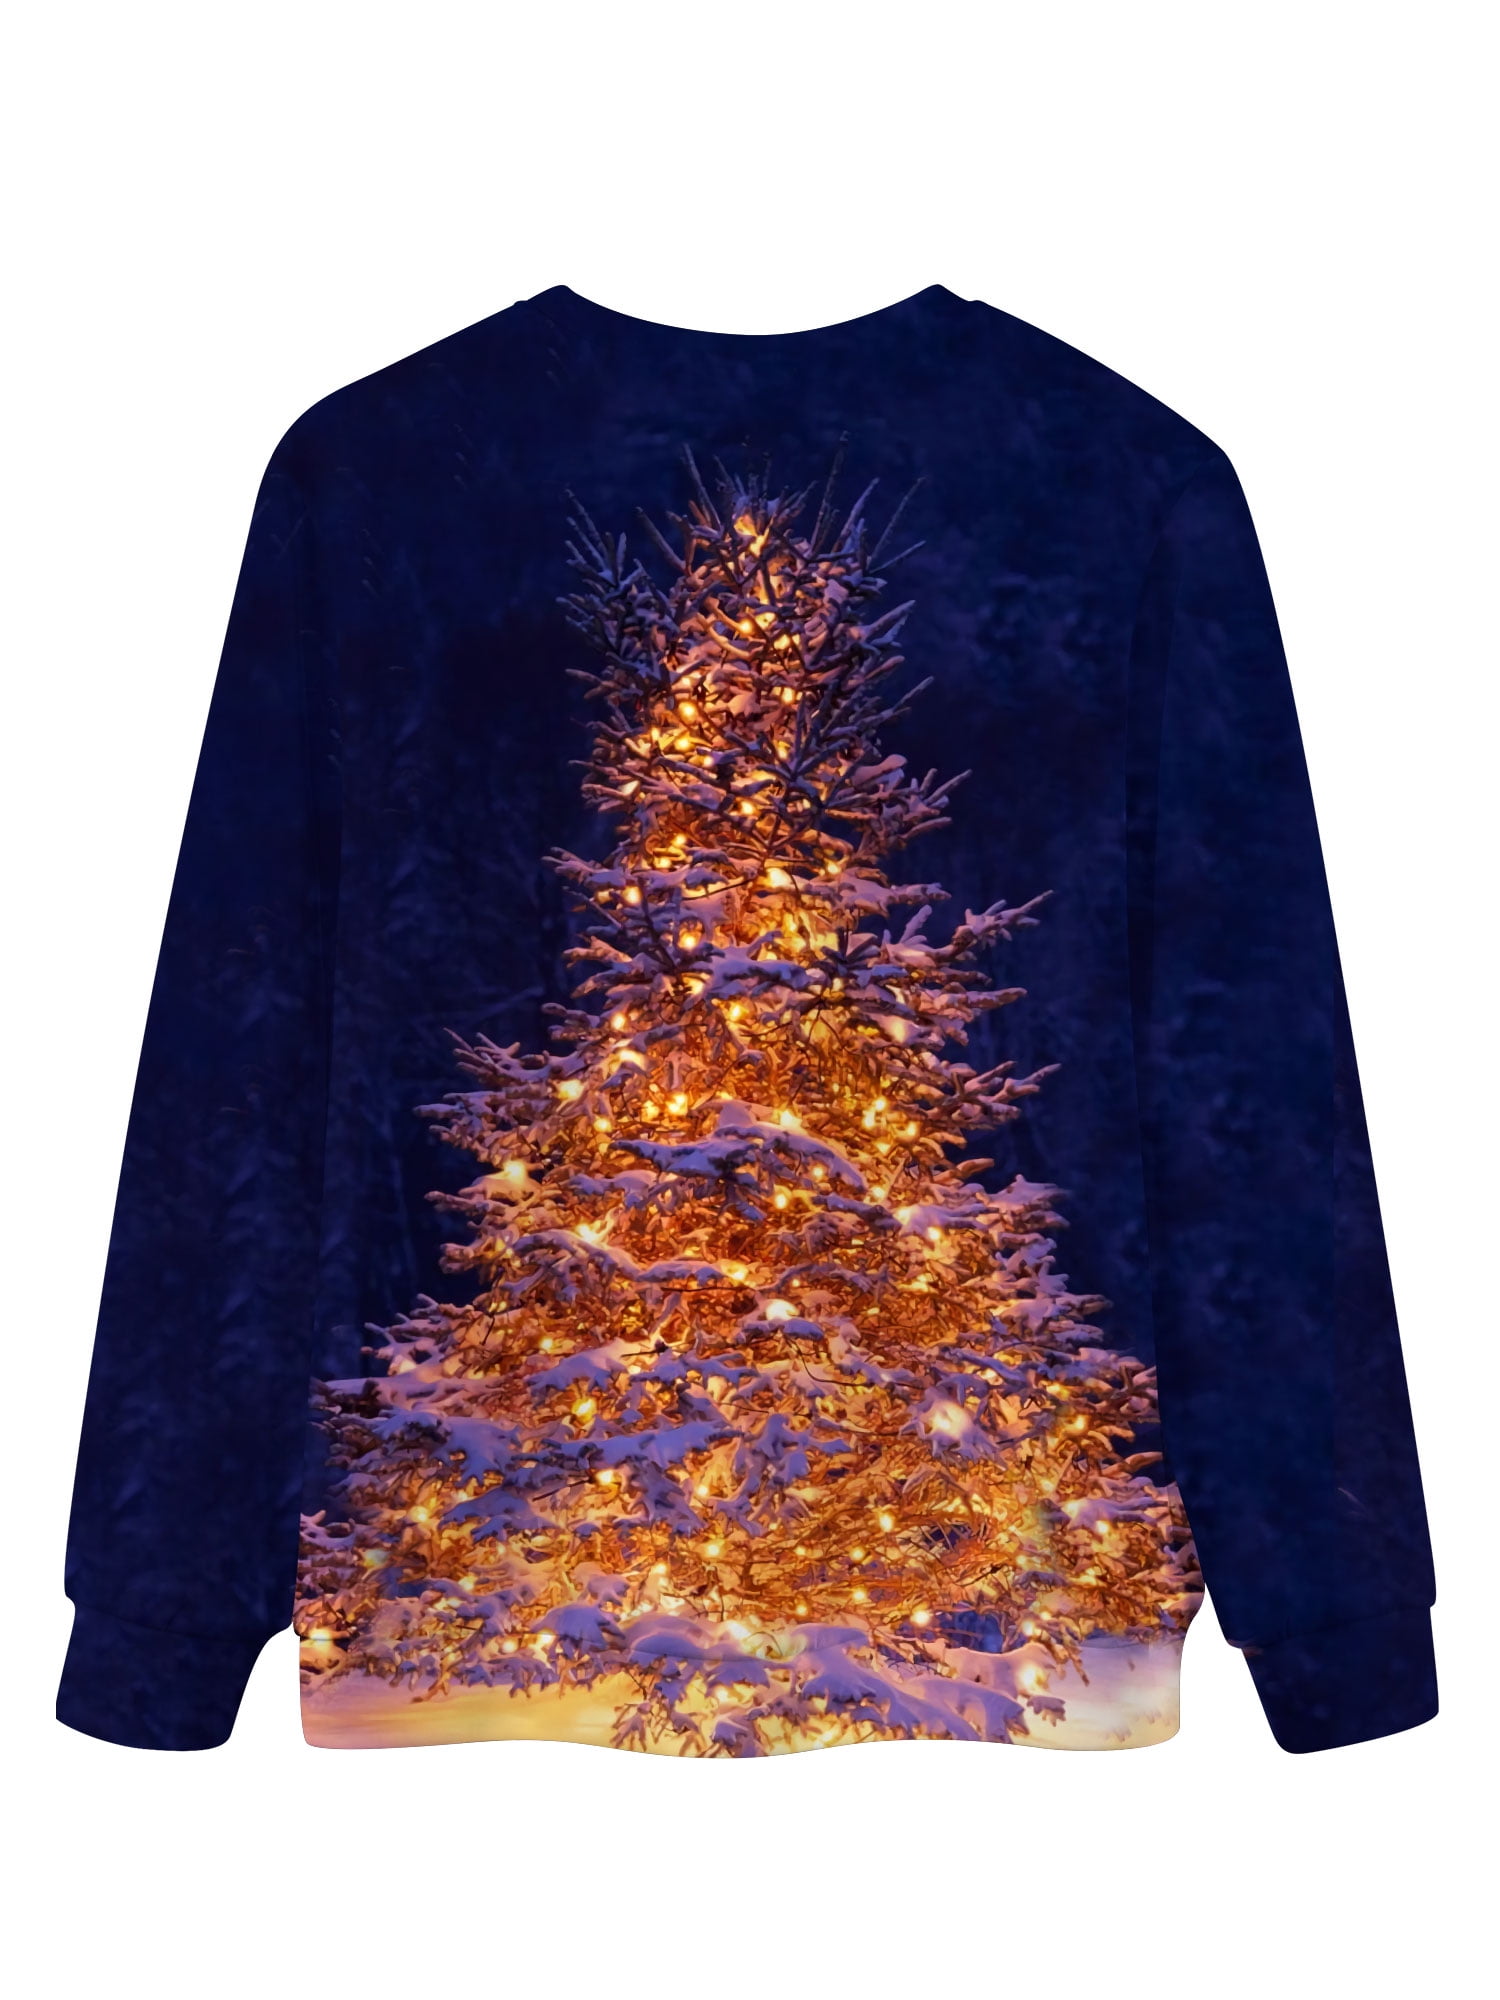 HAICOM Sweatshirt Women's Sweatshirt Pullover Graphic Christmas Print  Casual Sports 3D Print Active Streetwear Sweatshirts Blue : Sports &  Outdoors 